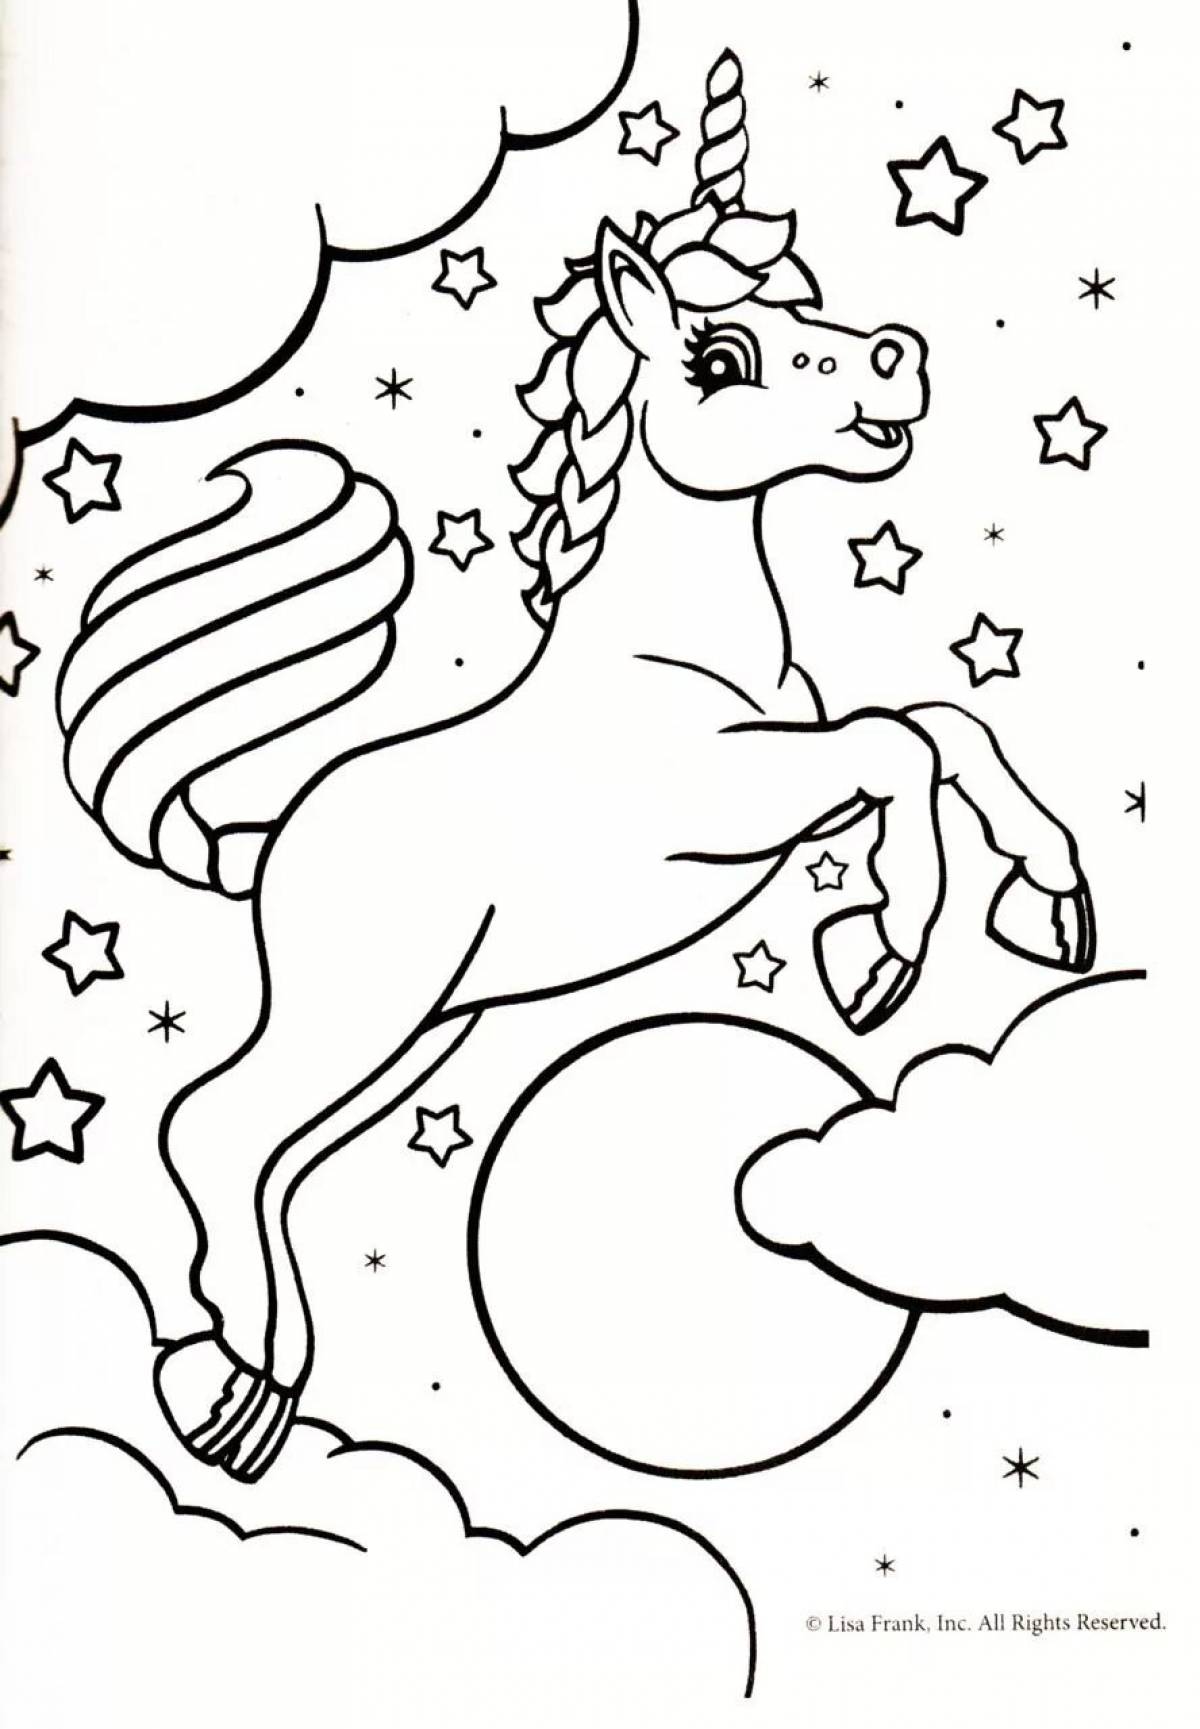 Unicorn festive Christmas coloring book